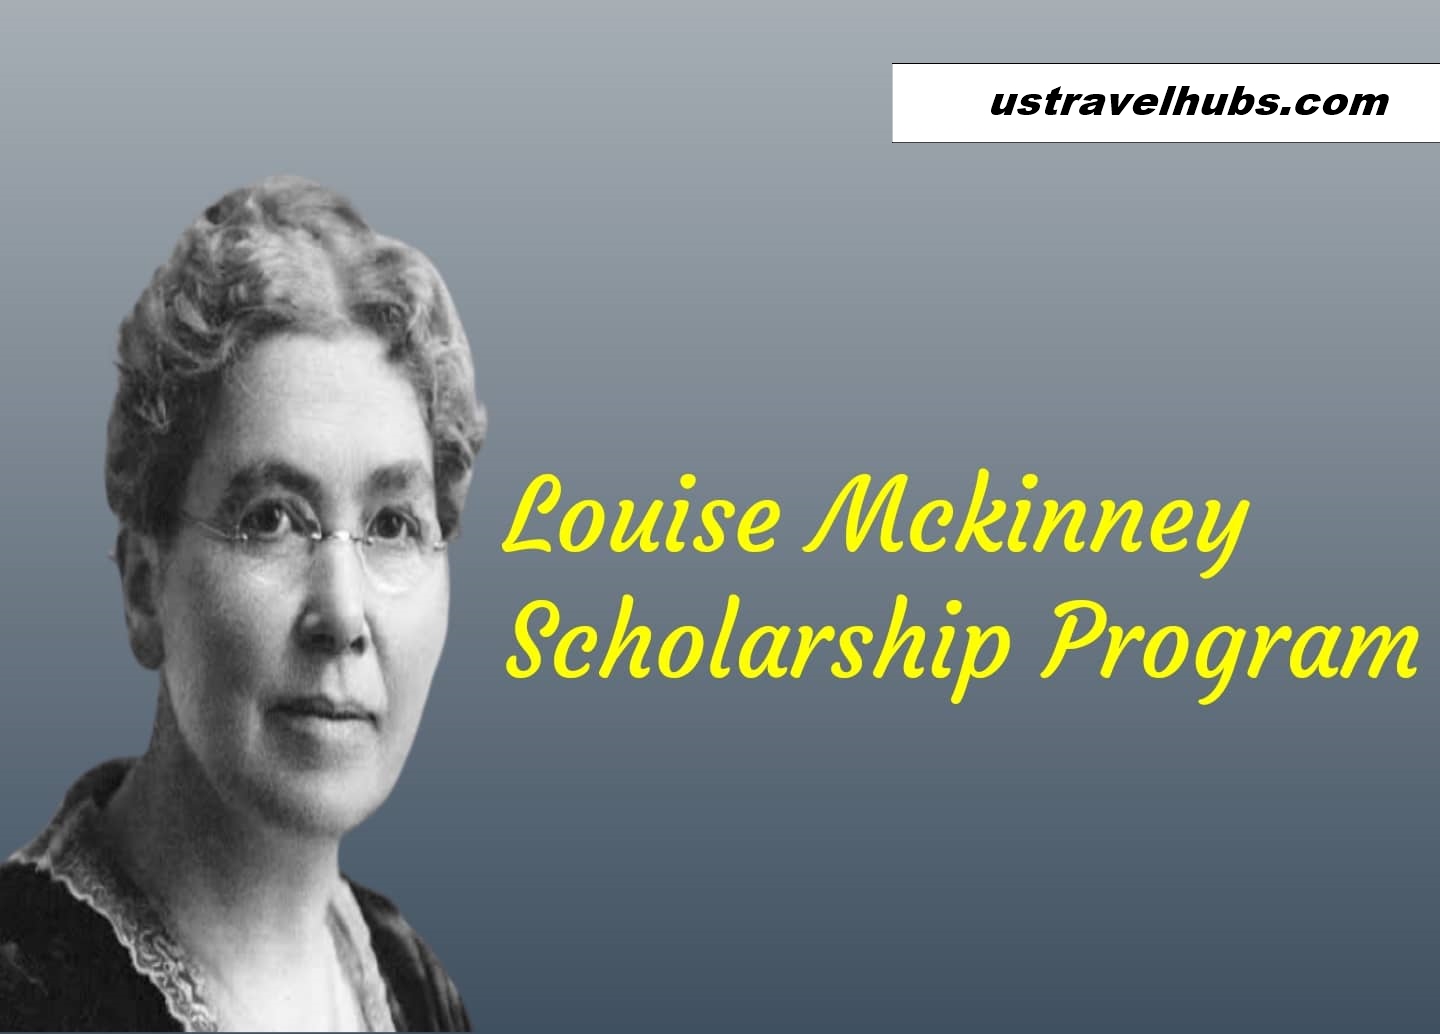 Louise McKinney Scholarship program